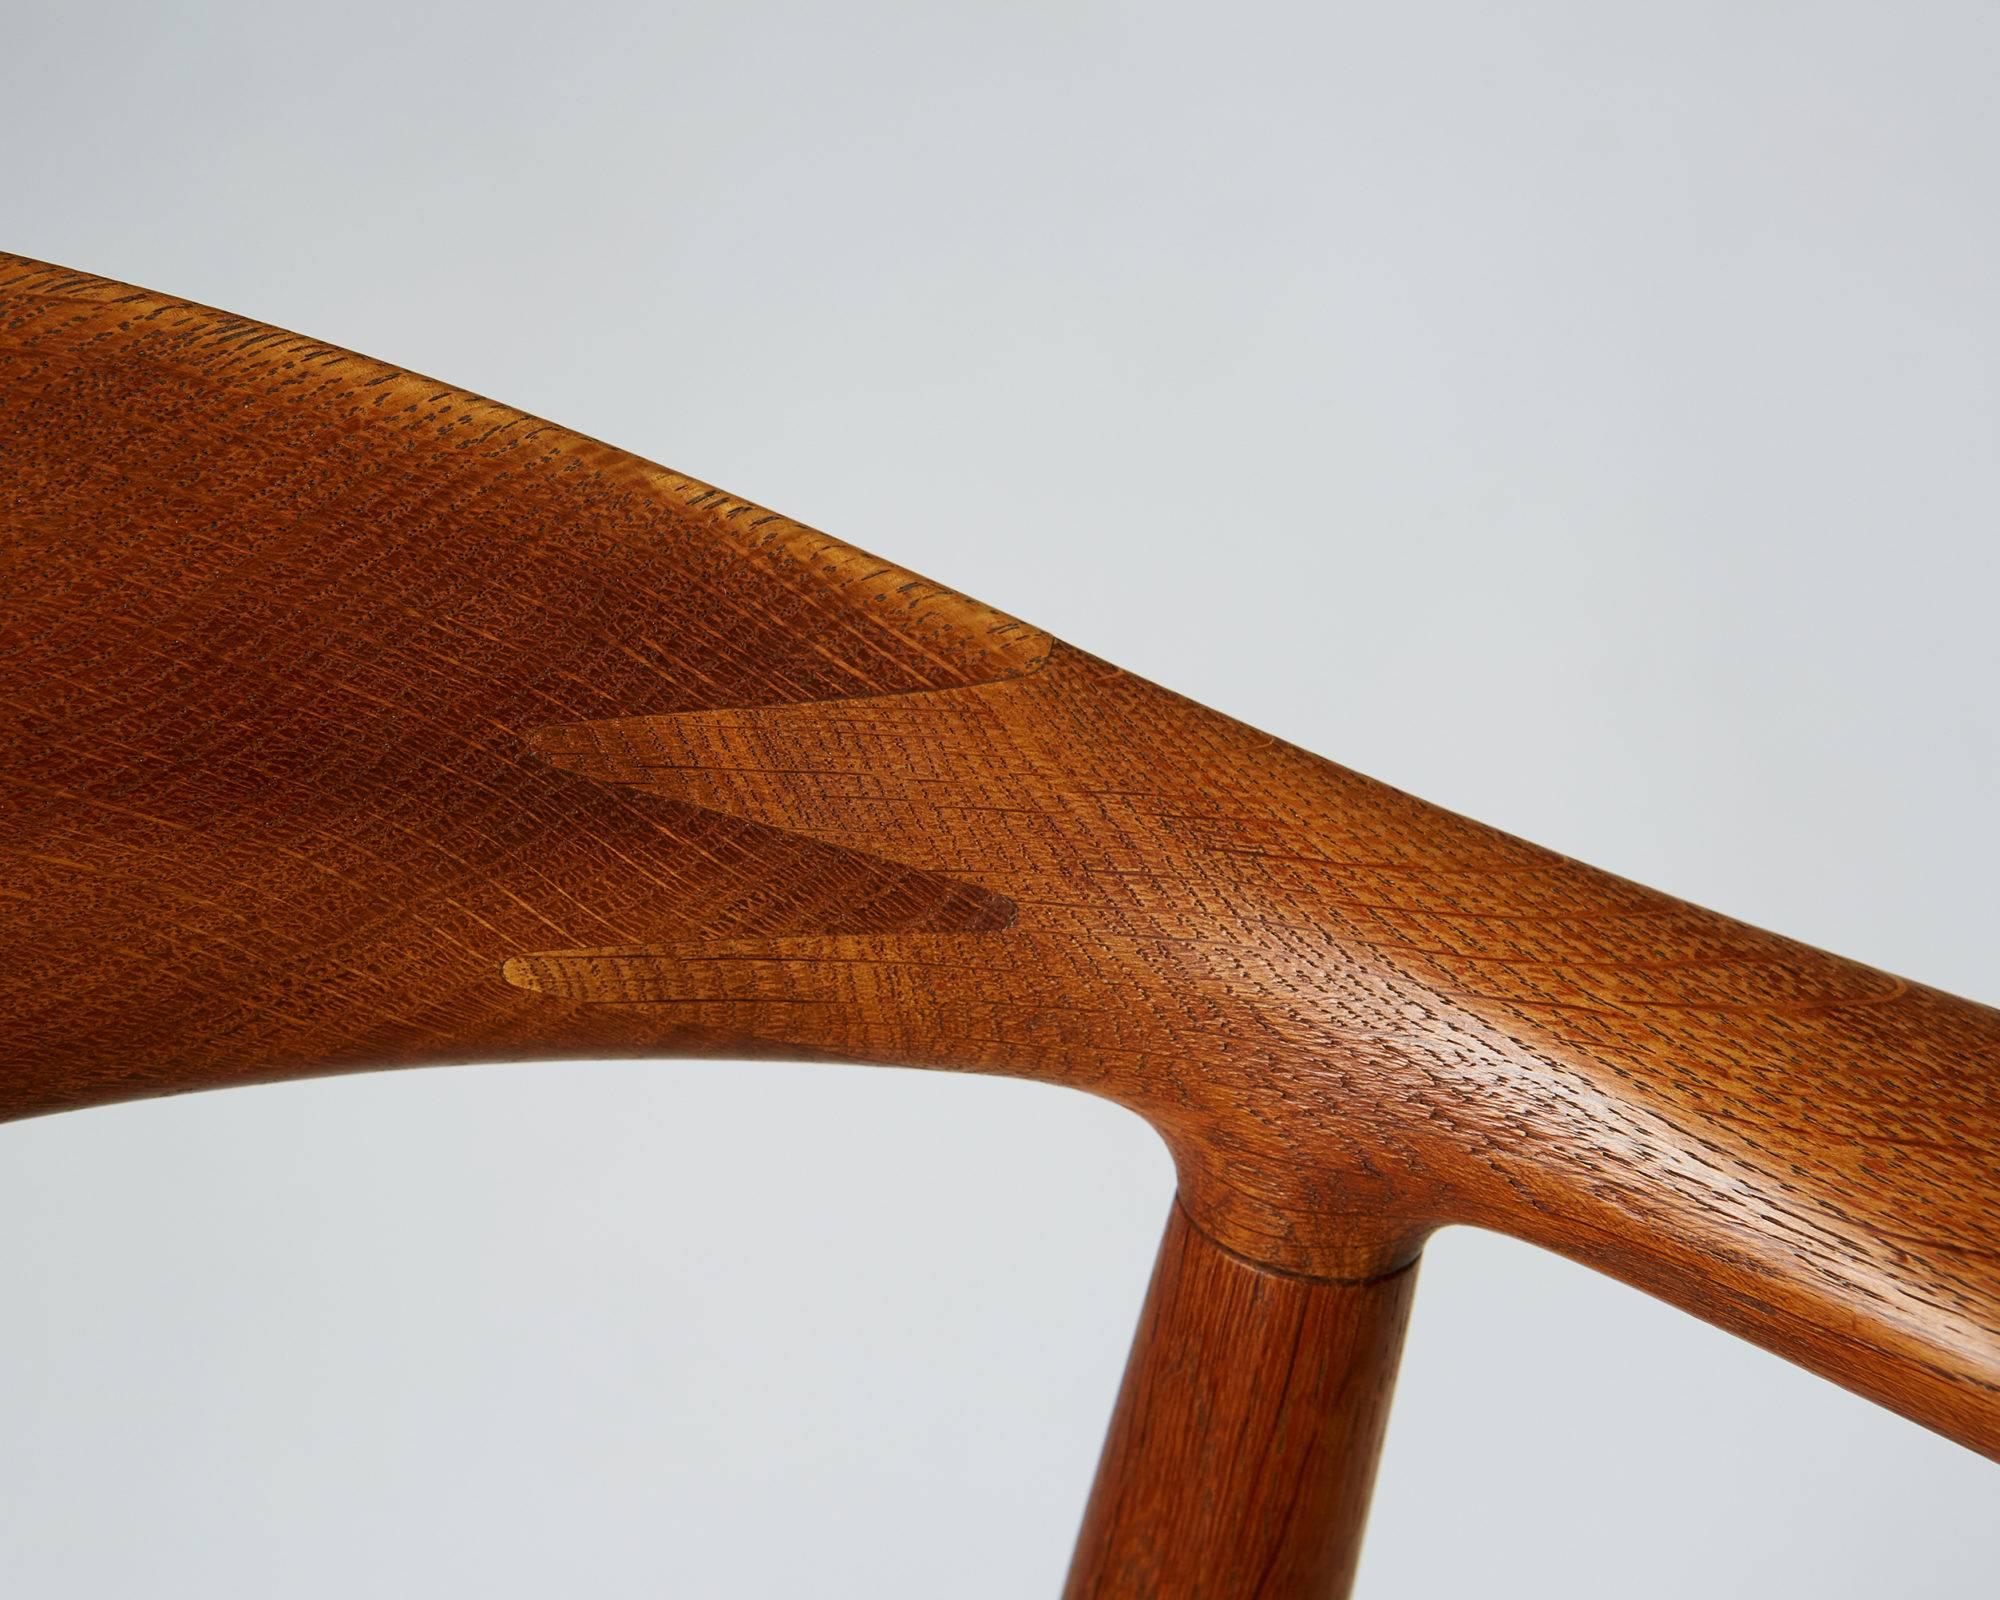 Pair of Armchairs “The Chair” Designed by Hans J. Wegner, Denmark, 1949 1